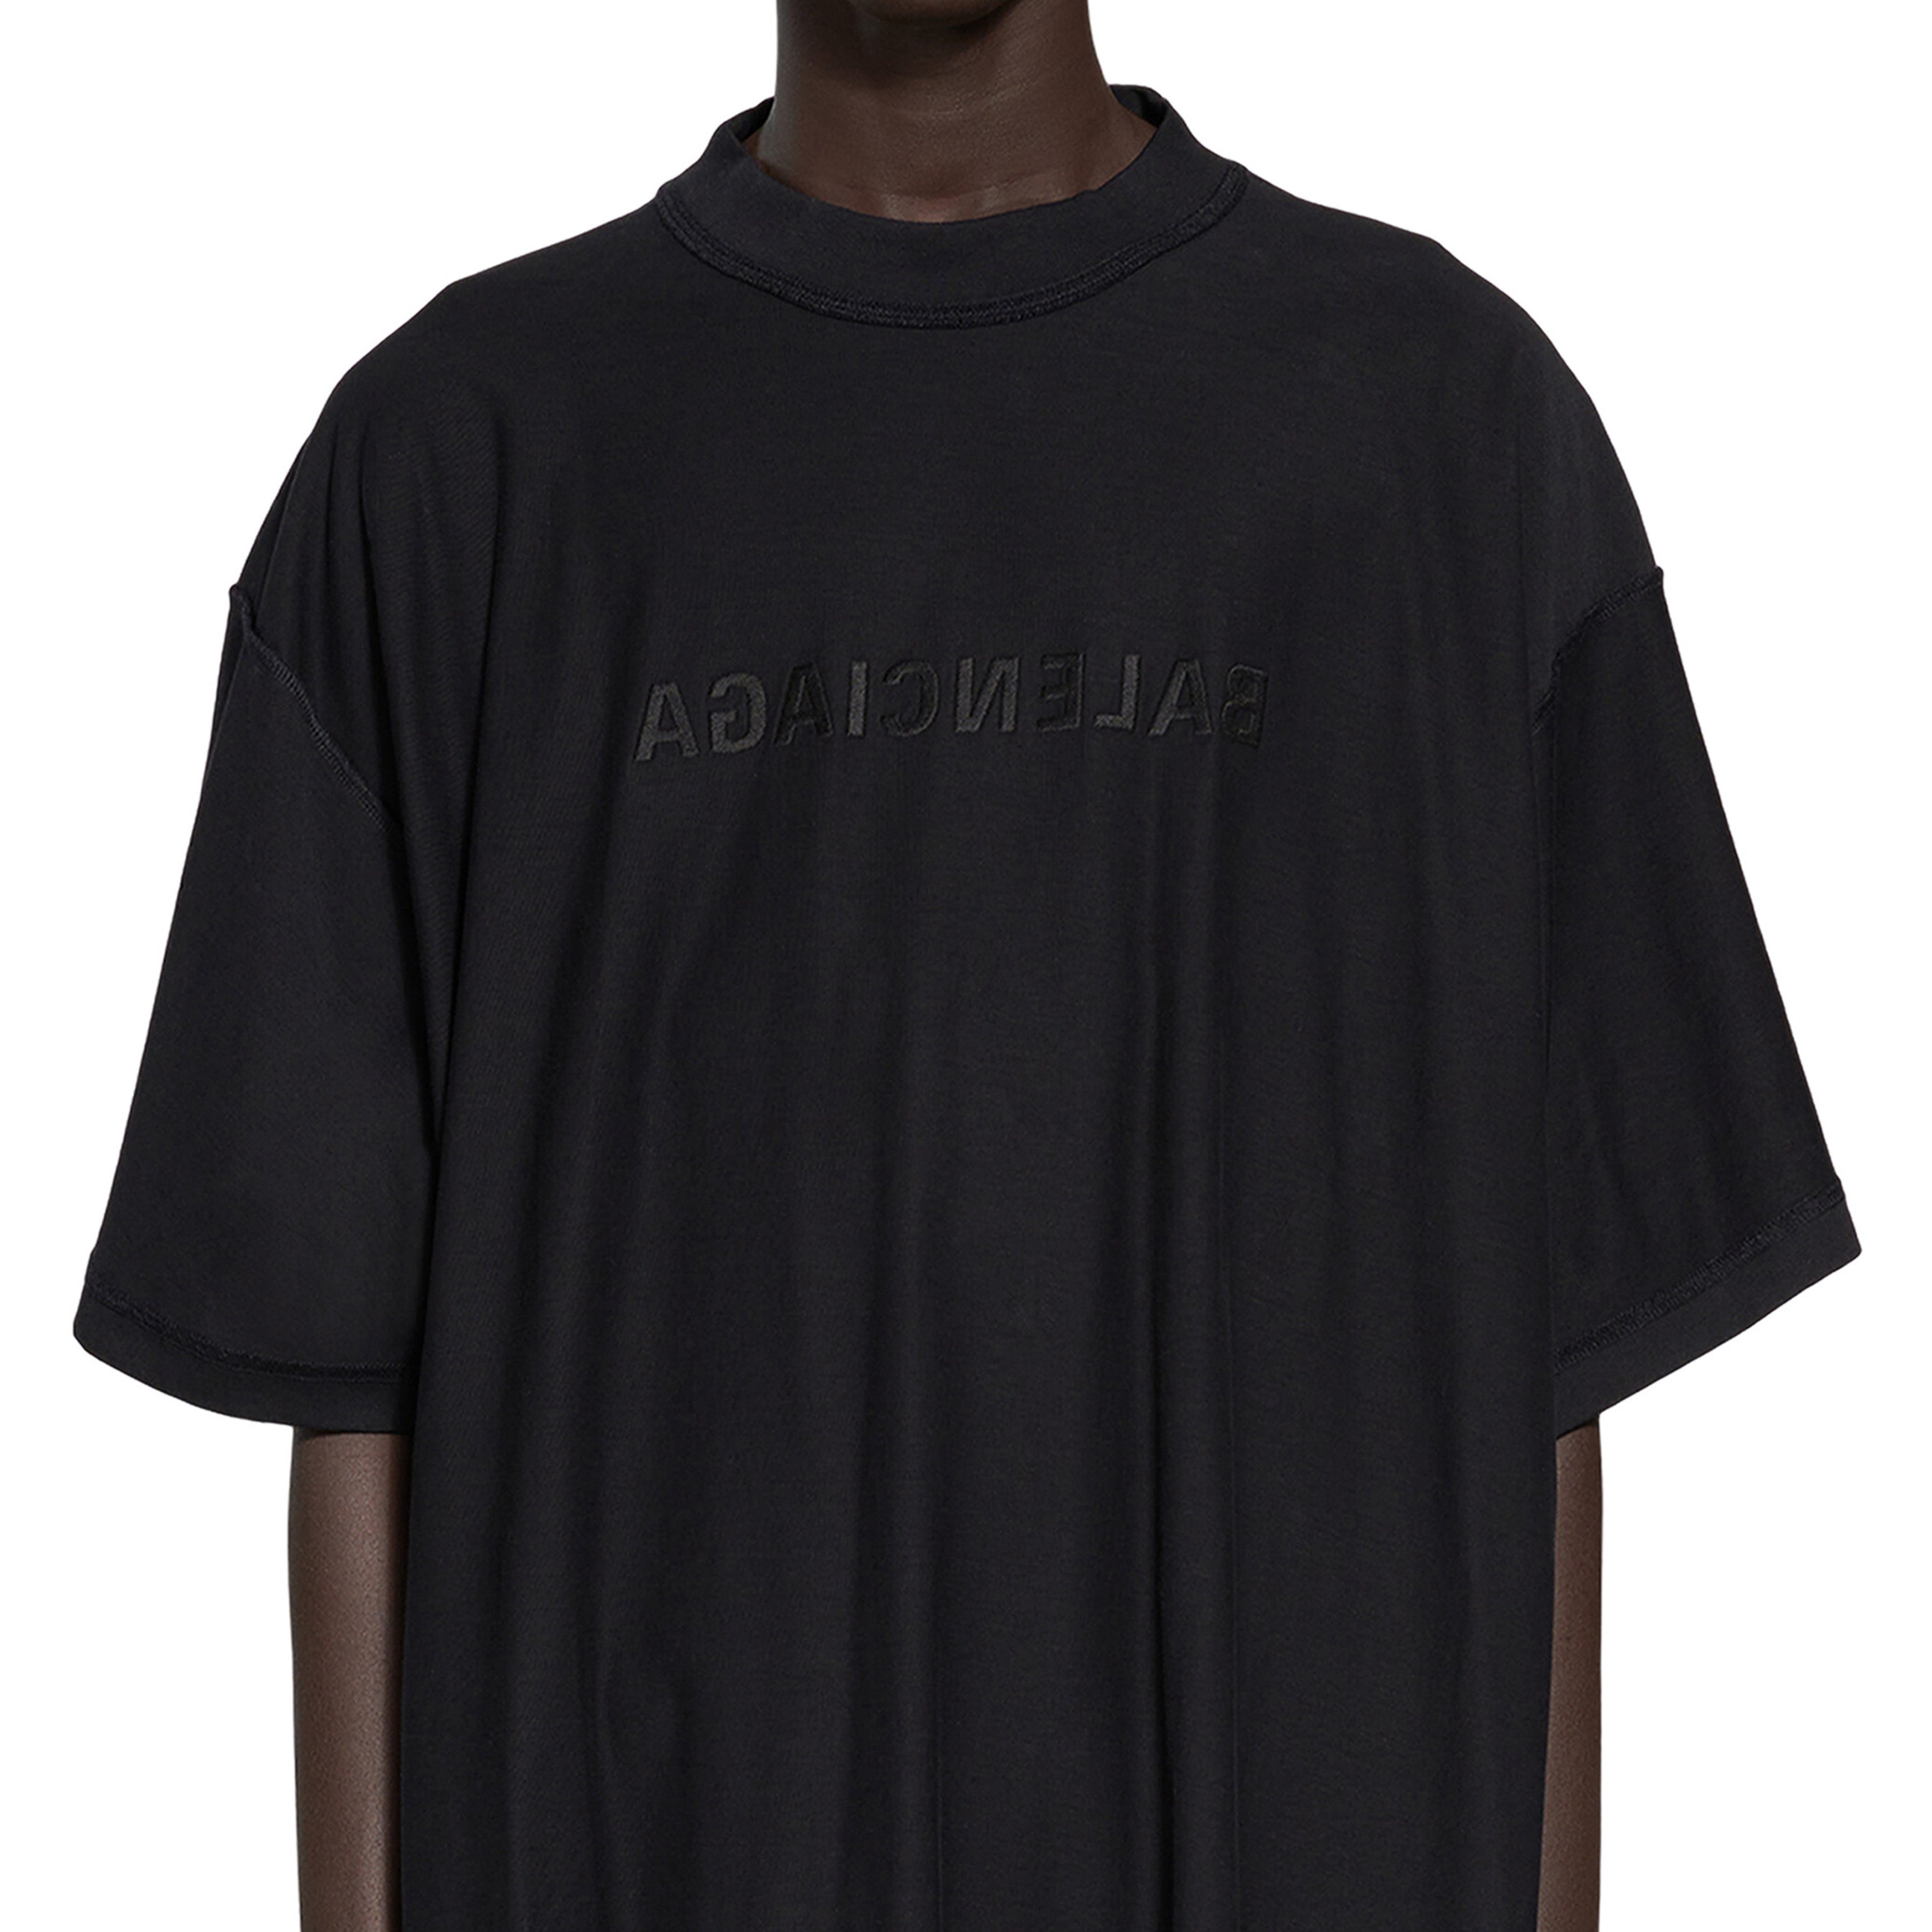 Balenciaga - Men’s Mirror Inside Out T-Shirt - (Black)